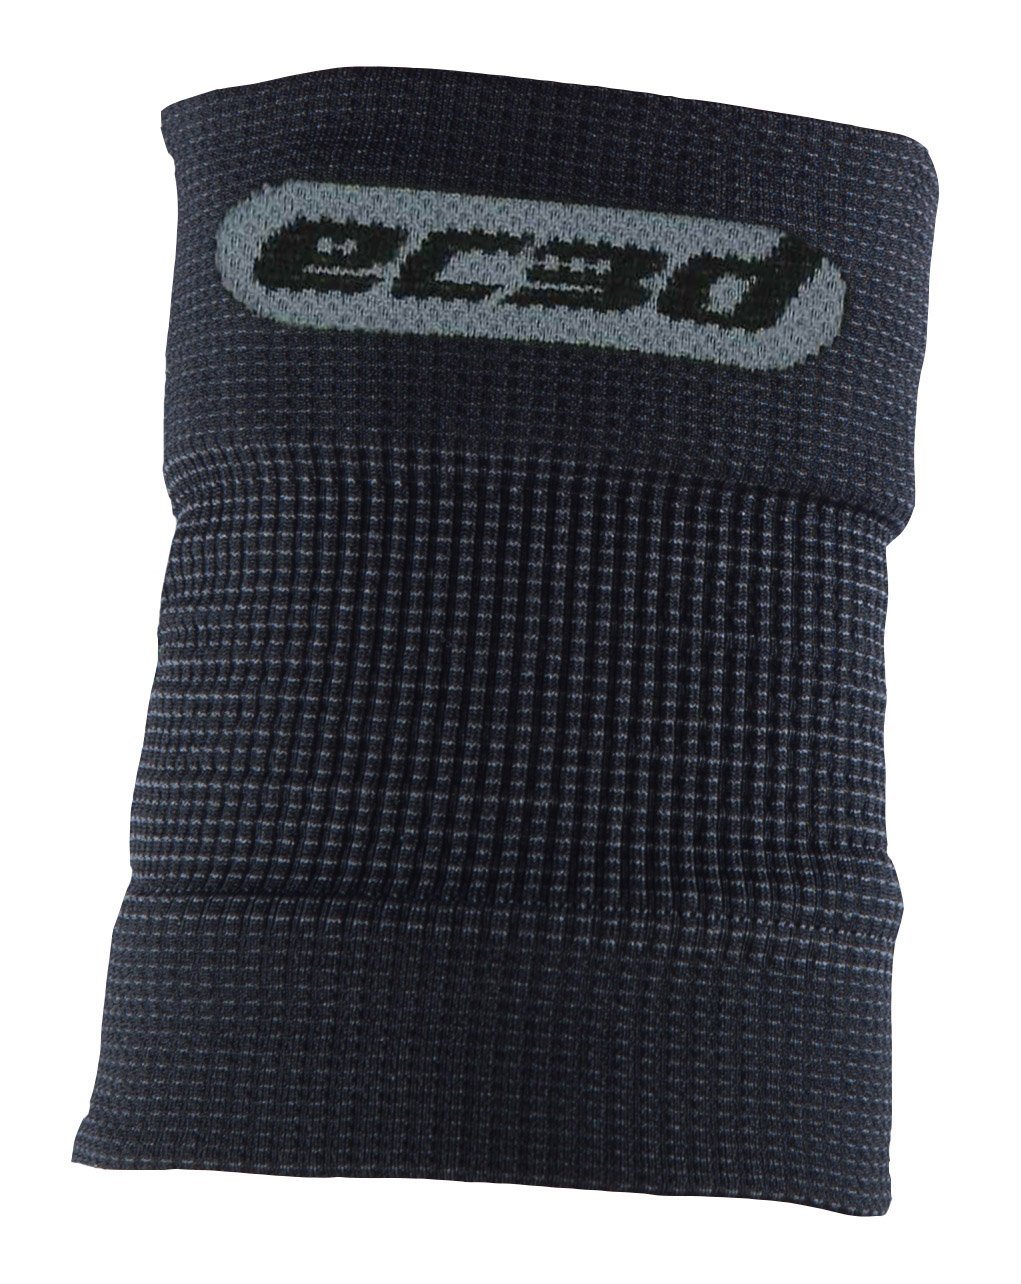 SportsMed Compression Wrist Support, EC3D Sports